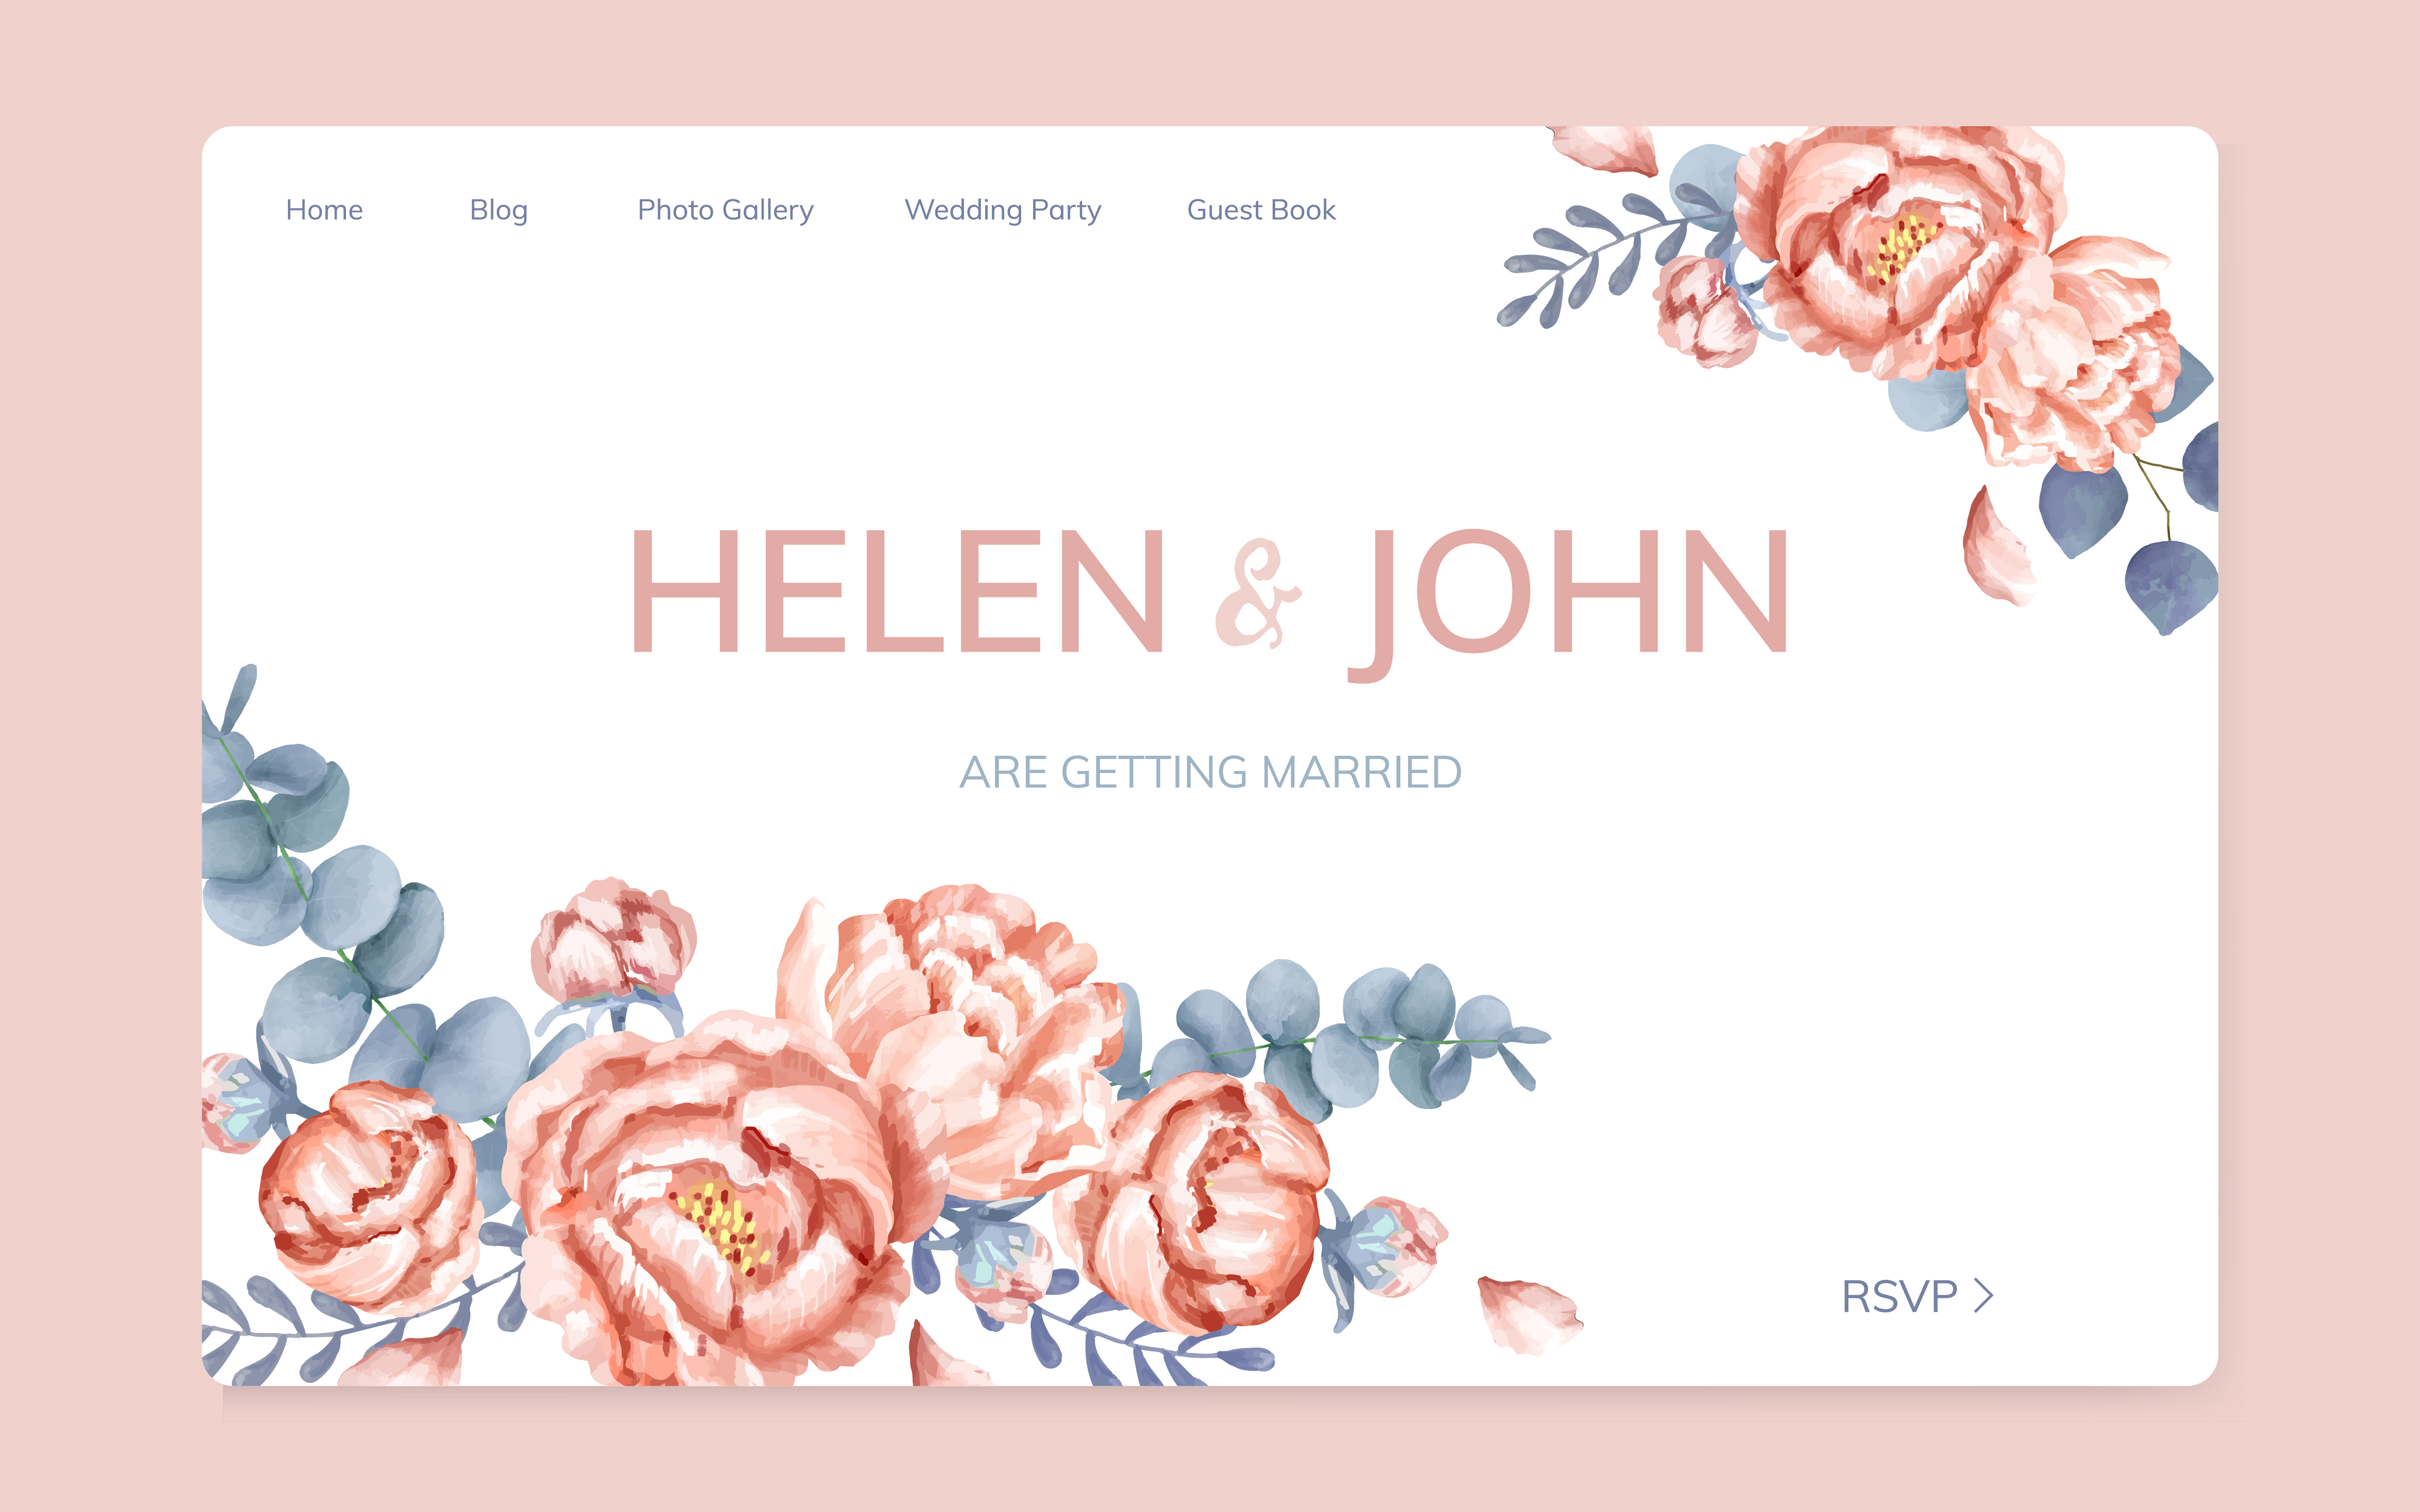 Floral wedding invitation website design Download Free Vectors